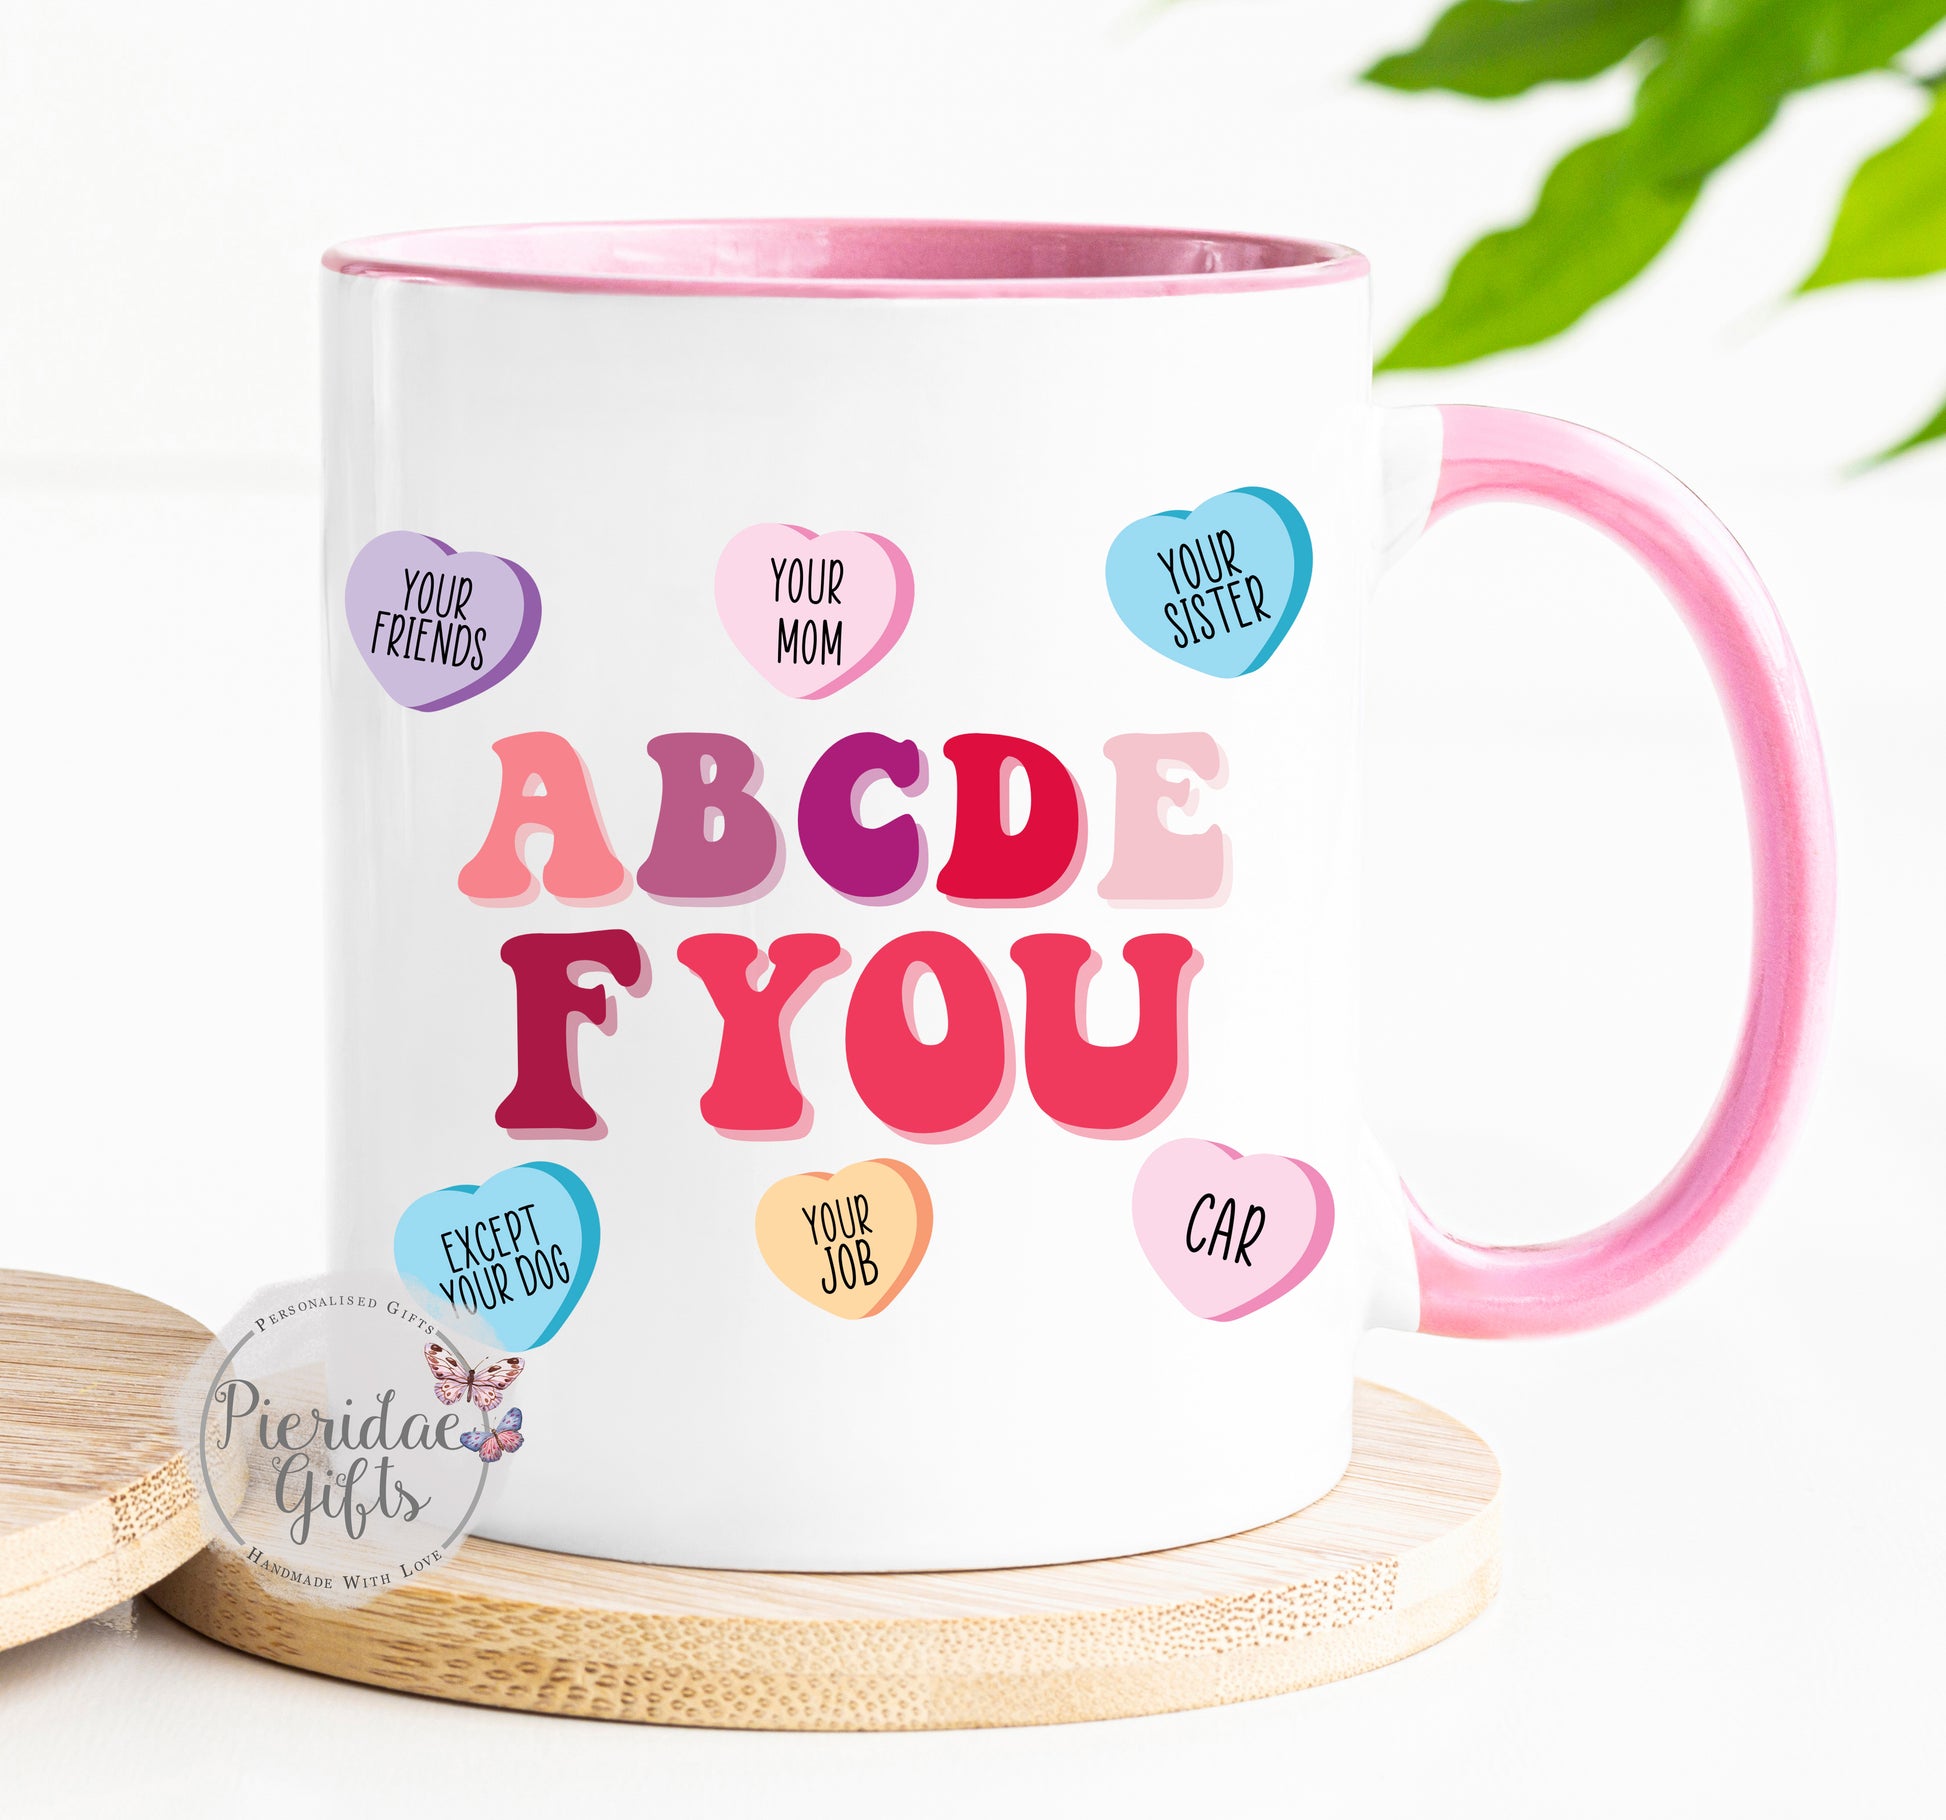 ABCDEFU song on a mug